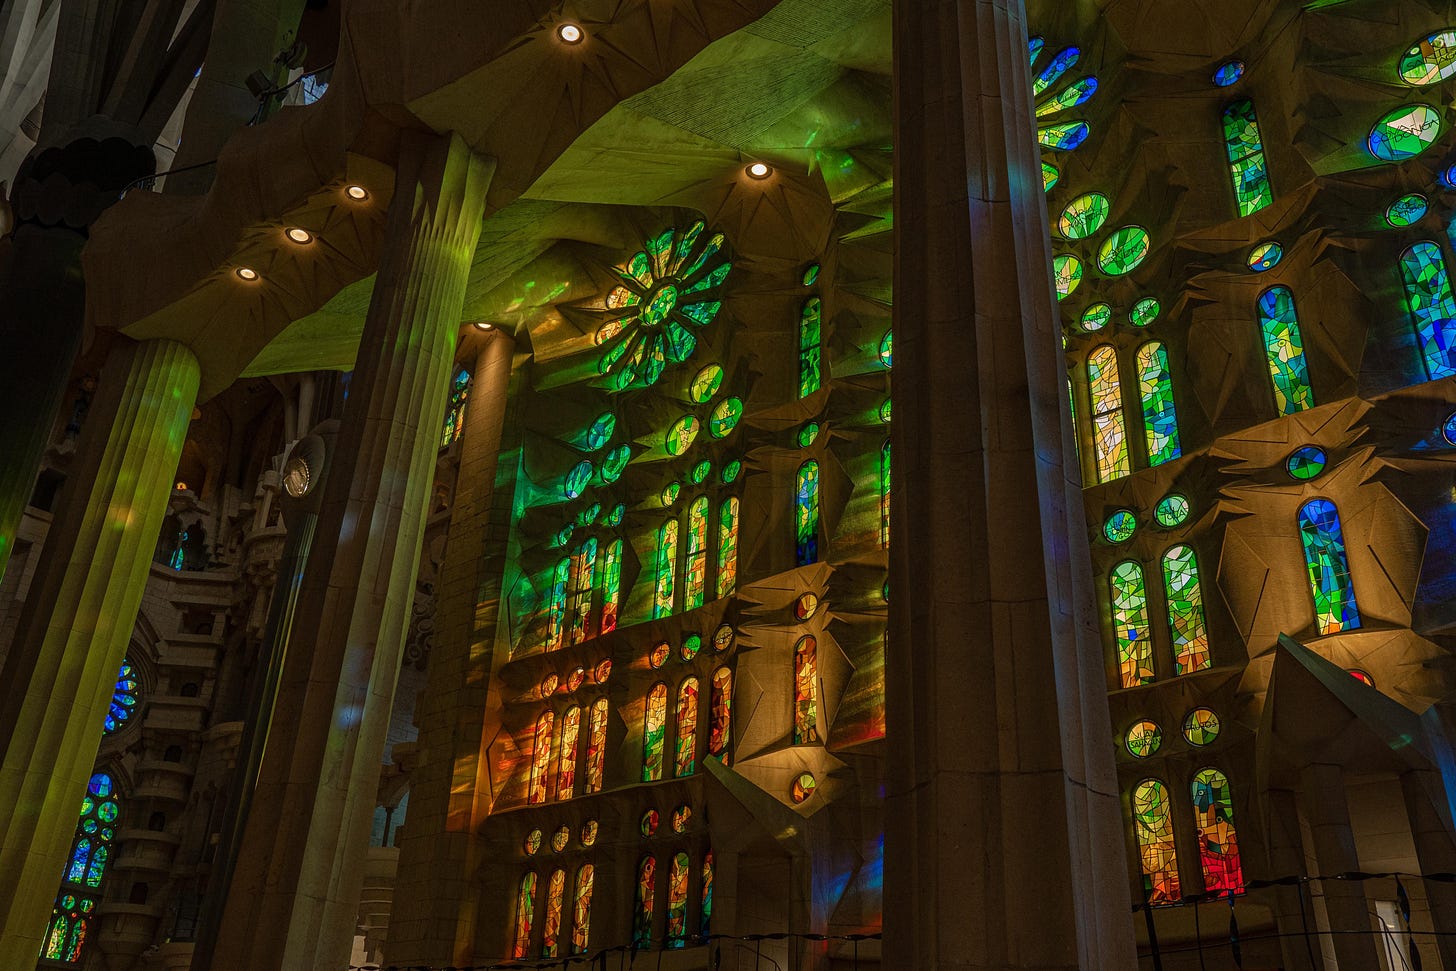 Windows of the Sagrada Familia, bleeding light in every imaginable color over gray stone.